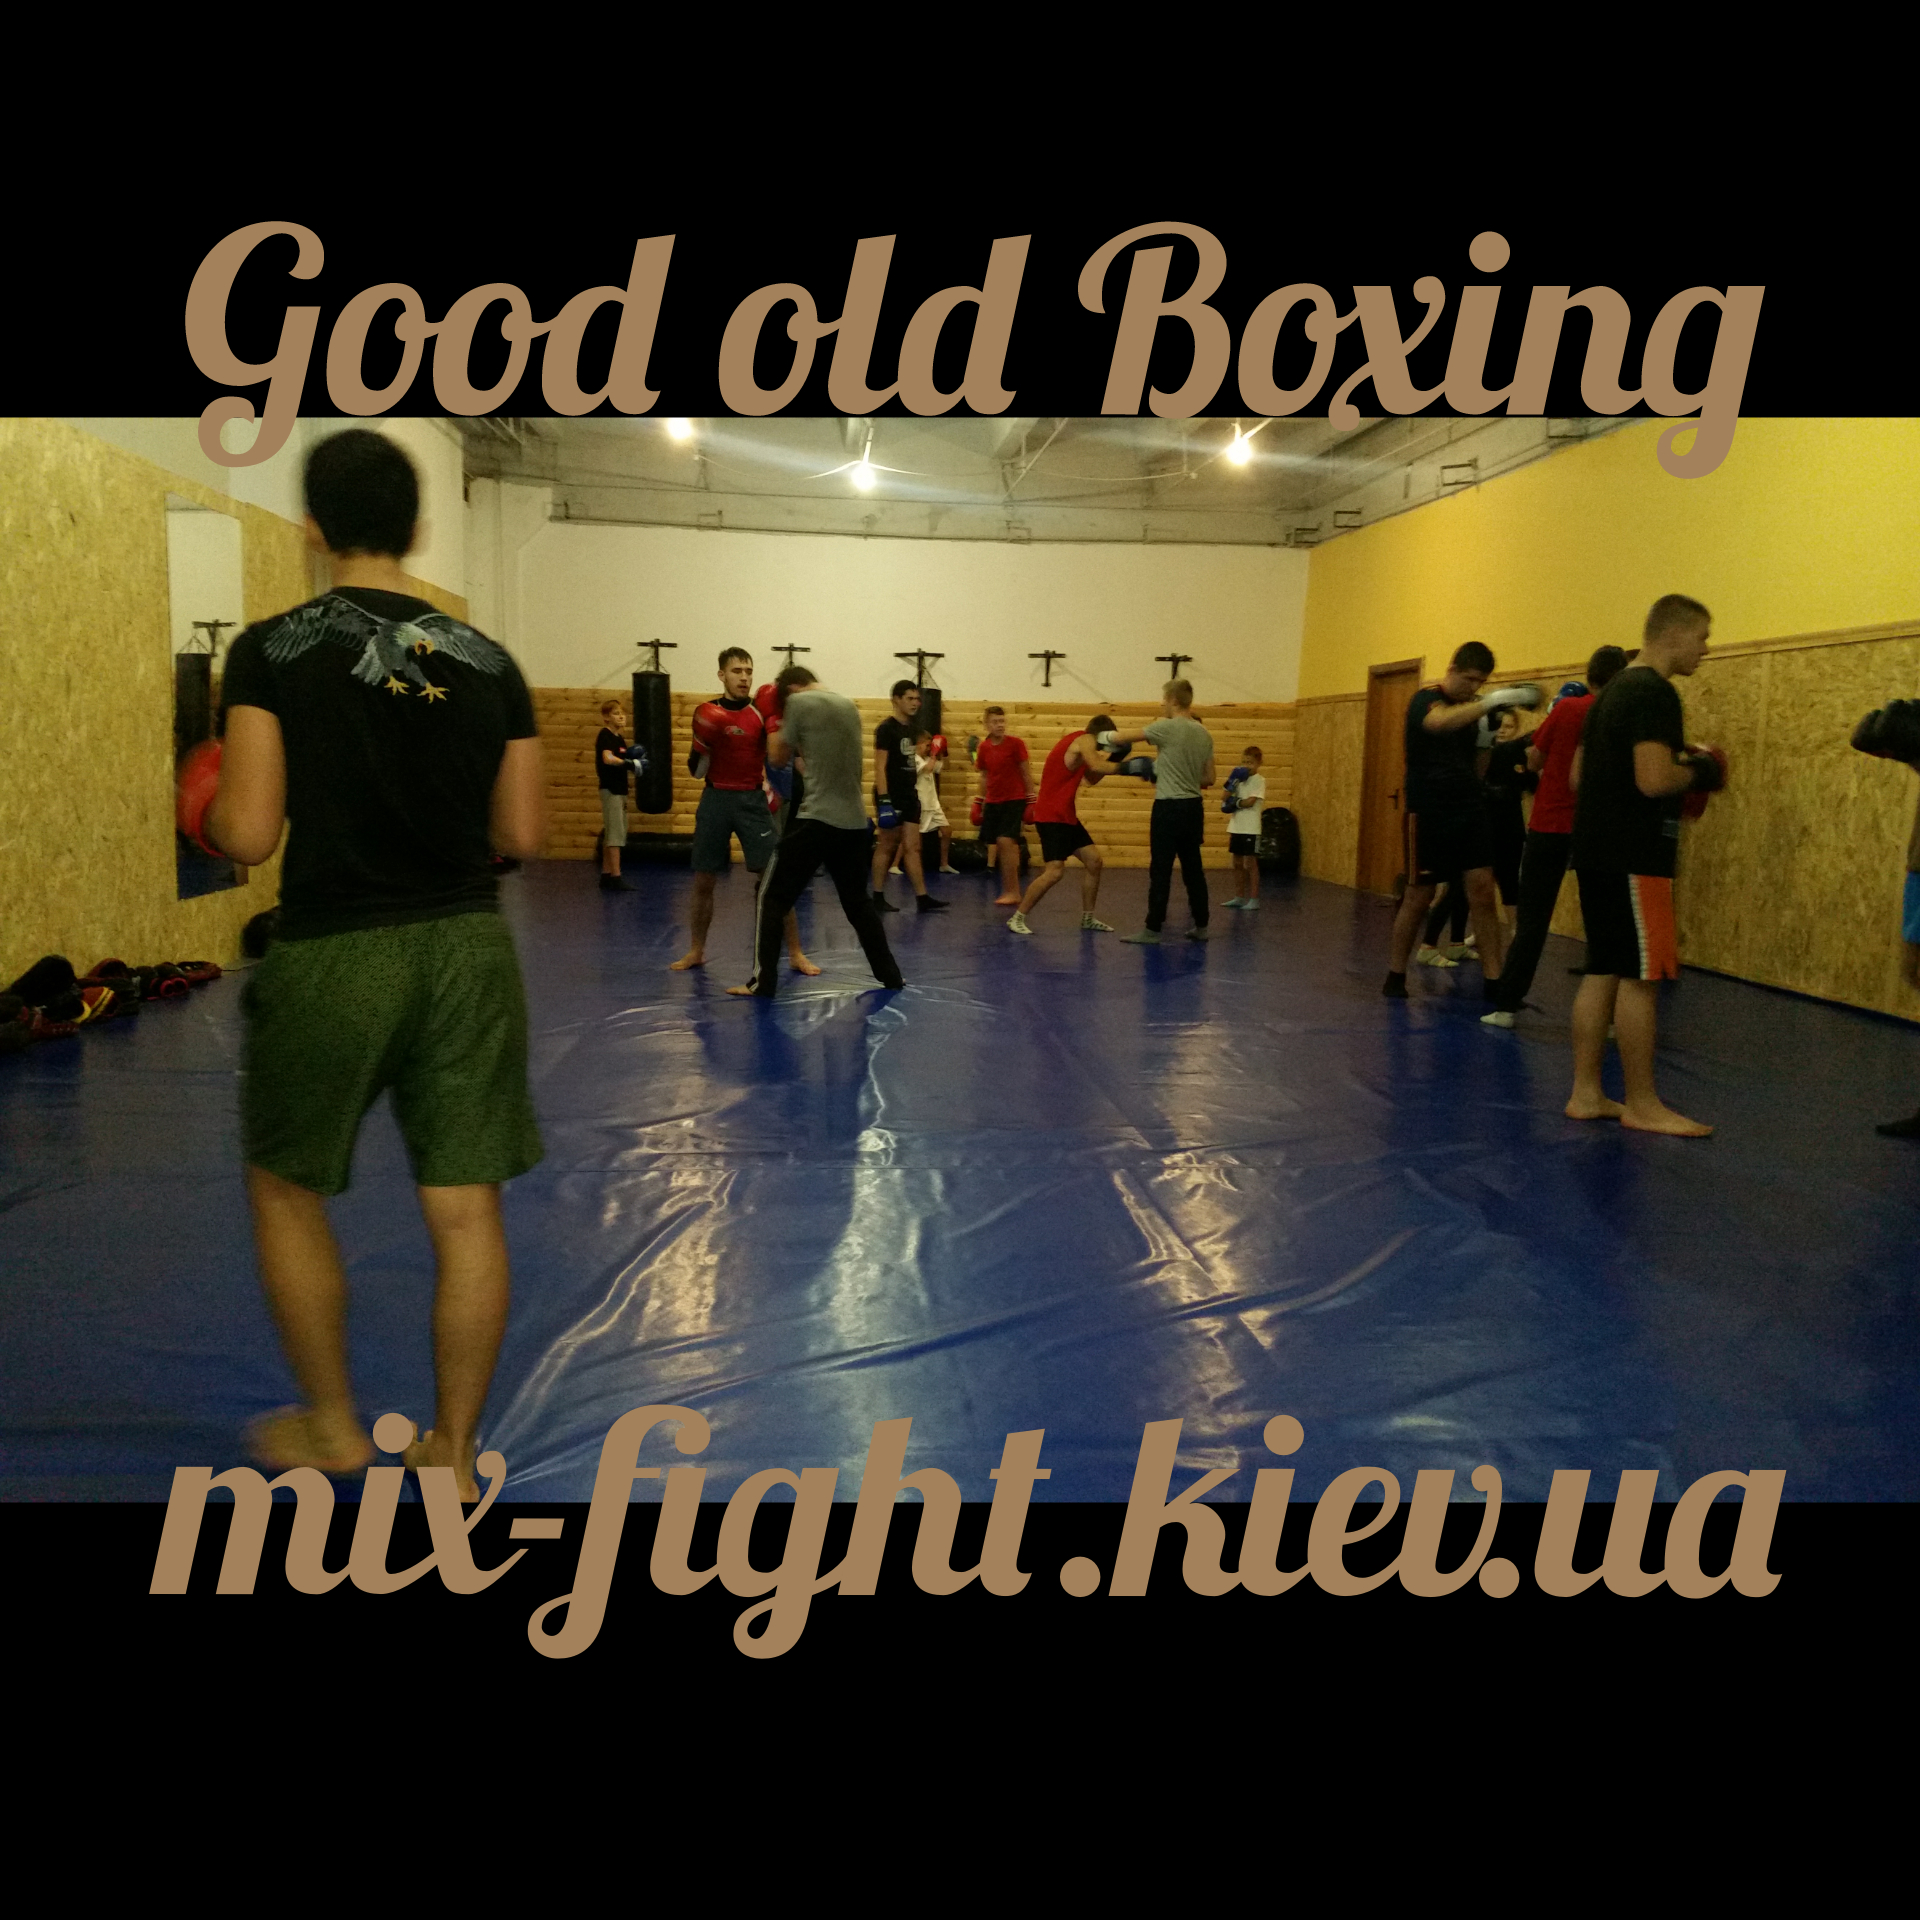 ММА Киев 120 mix-fight.kiev.ua.jpg